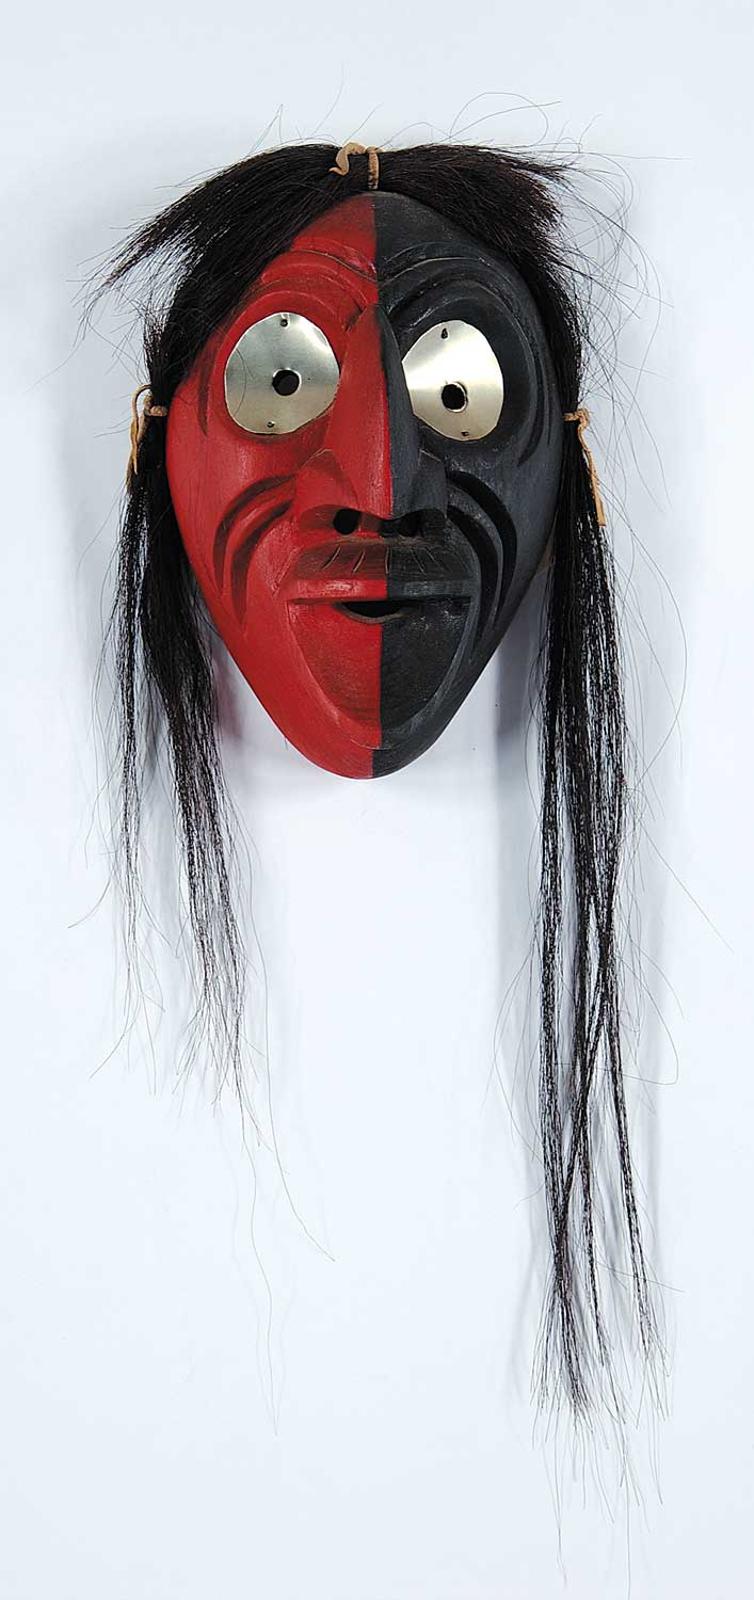 Elliott - Untitled - Red and Black Mask